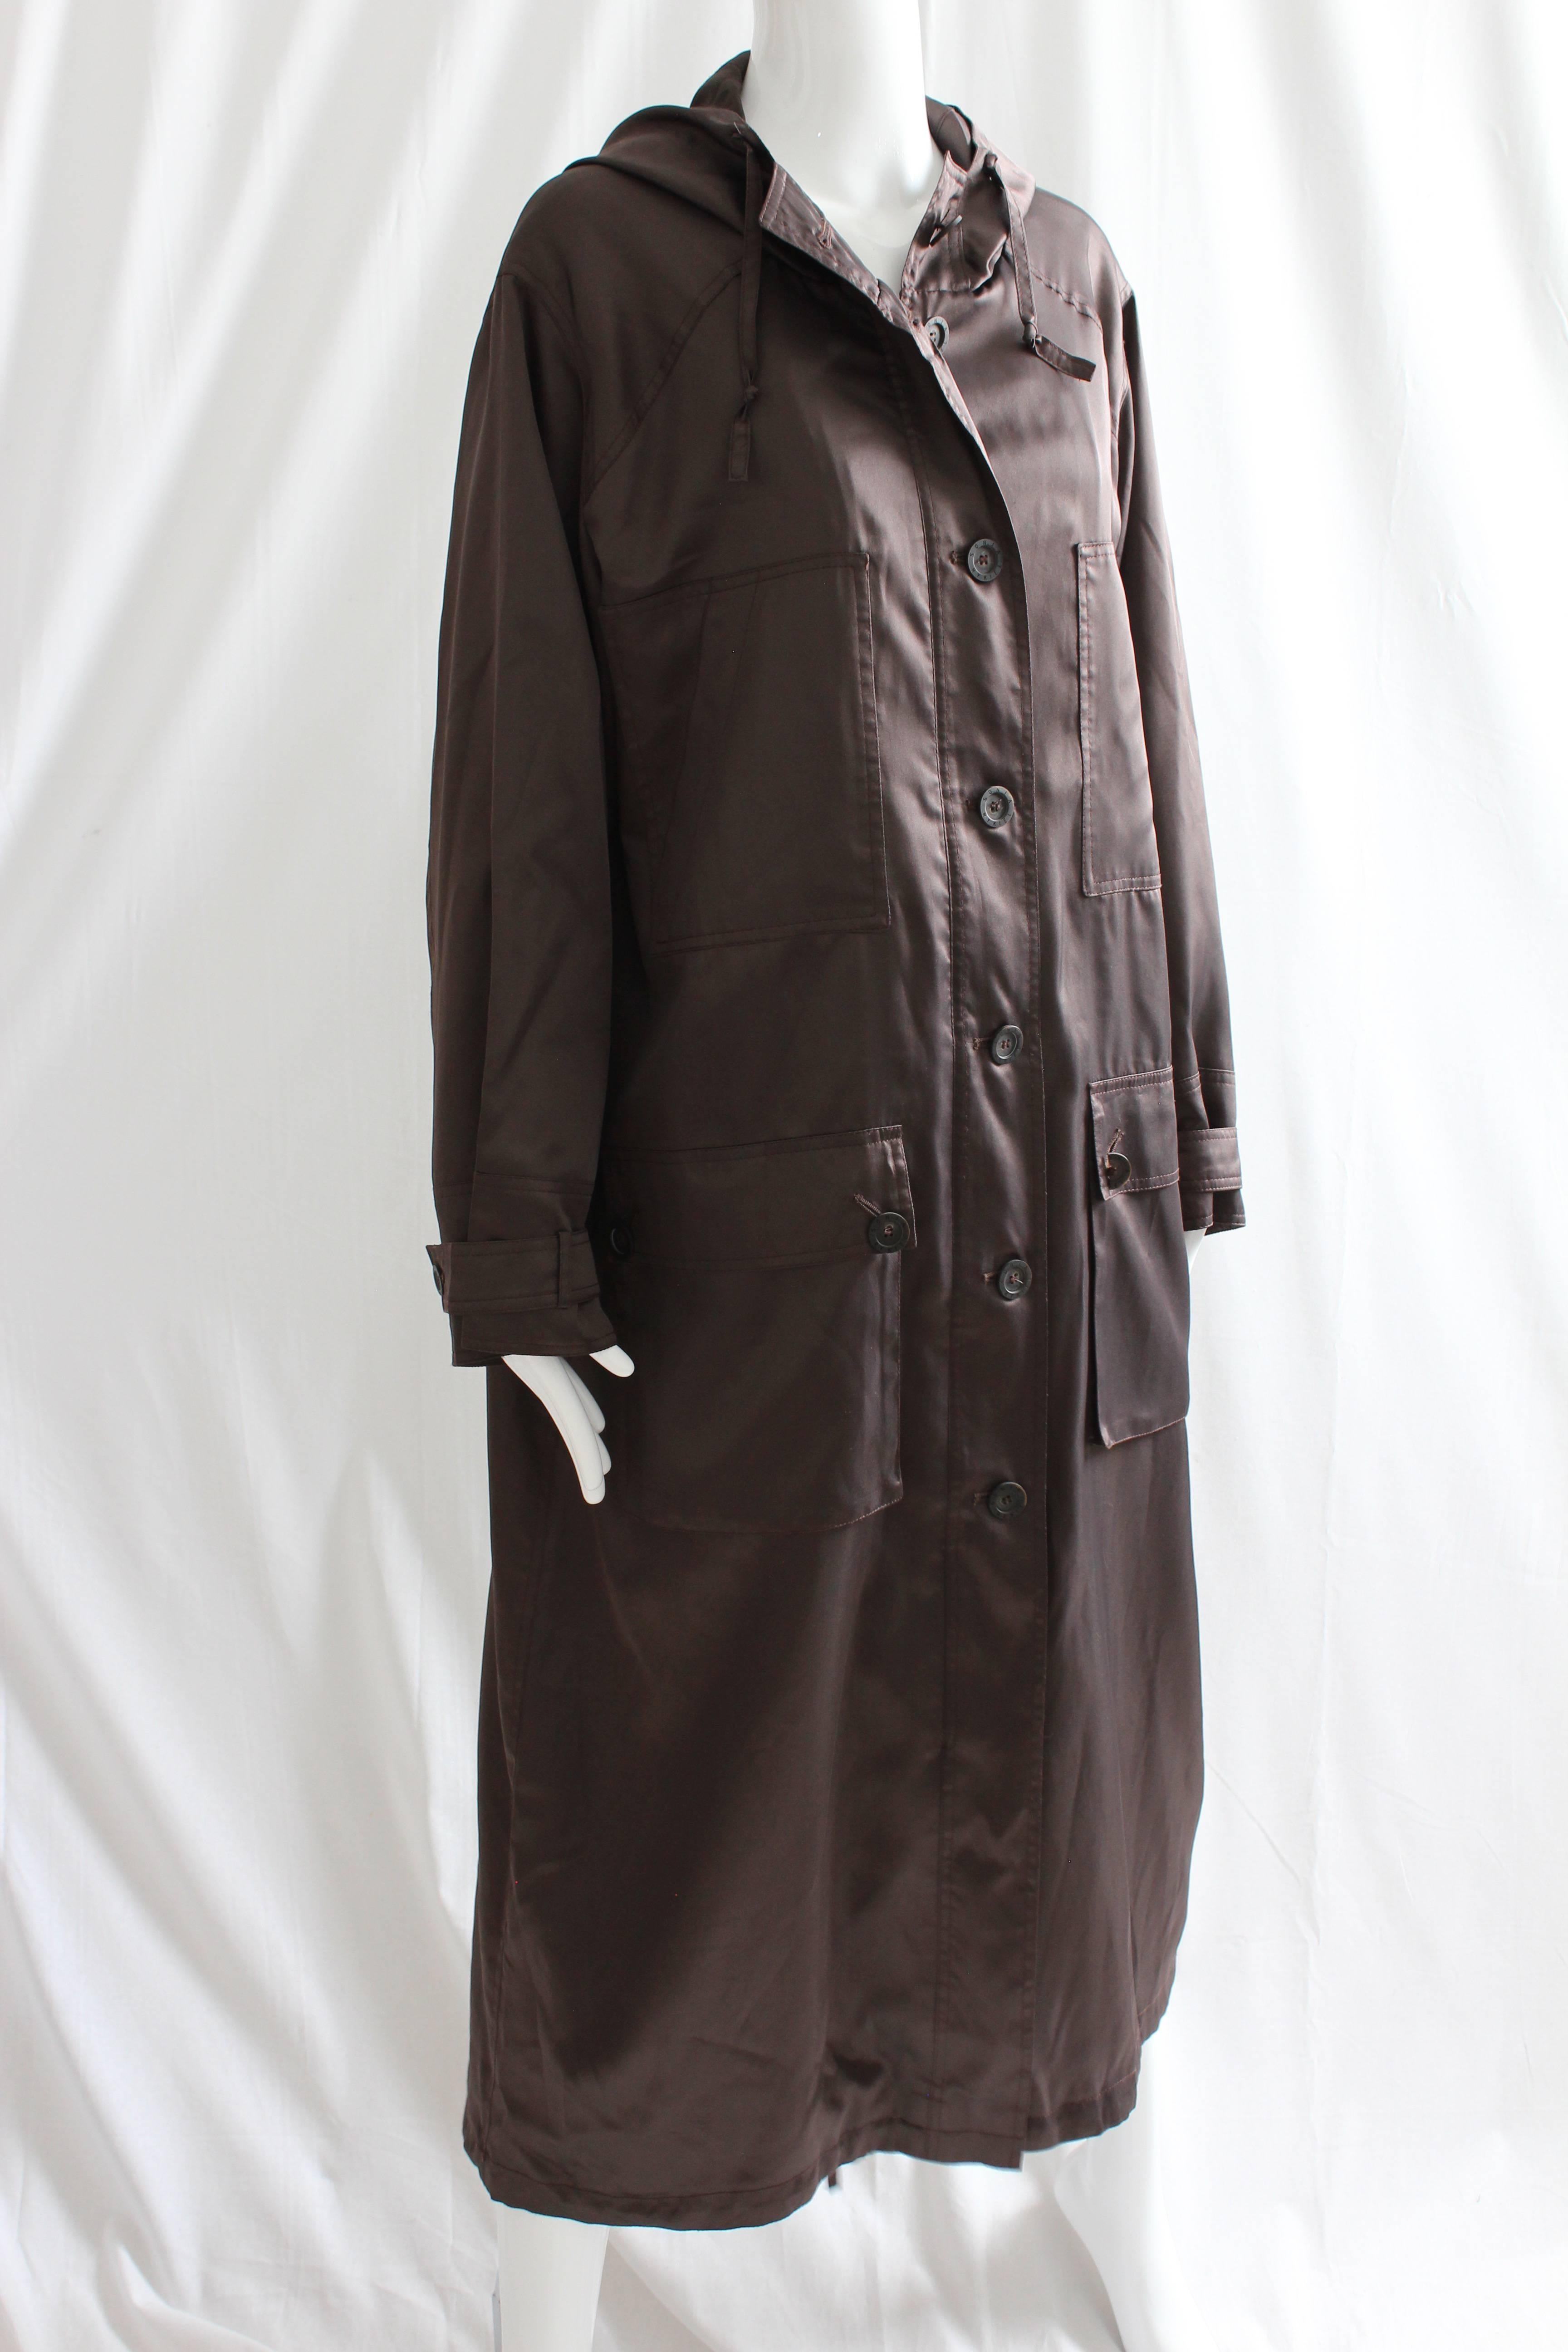 Sonia Rykiel Brown Satin Trench Coat with Hood, 1990s  2